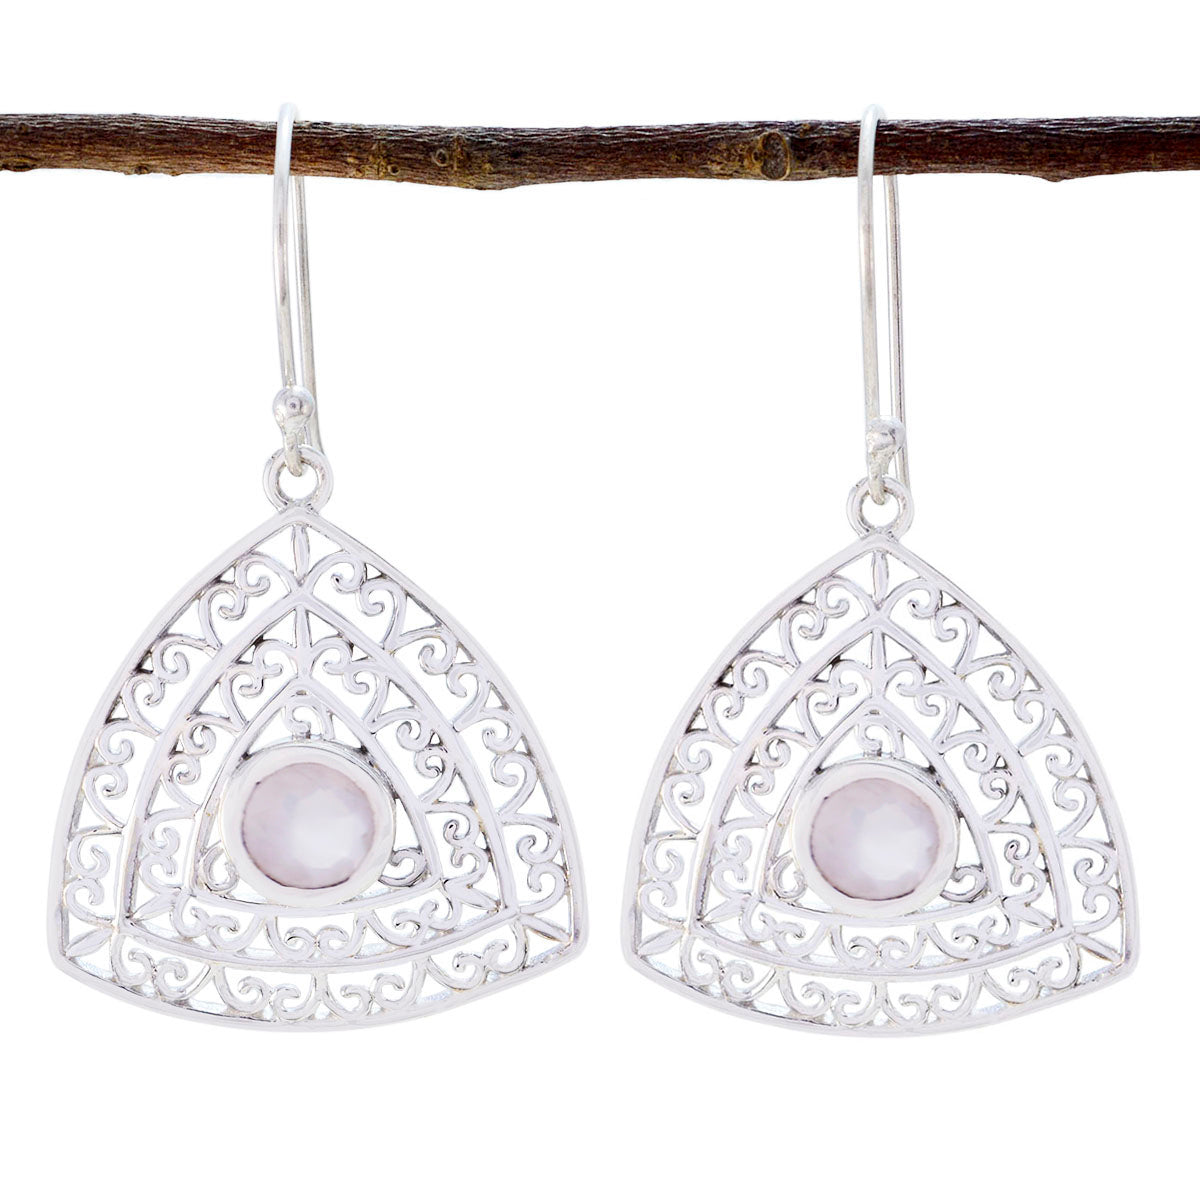 Riyo Genuine Gems round Faceted Pink Rose Quartz Silver Earring engagement gift